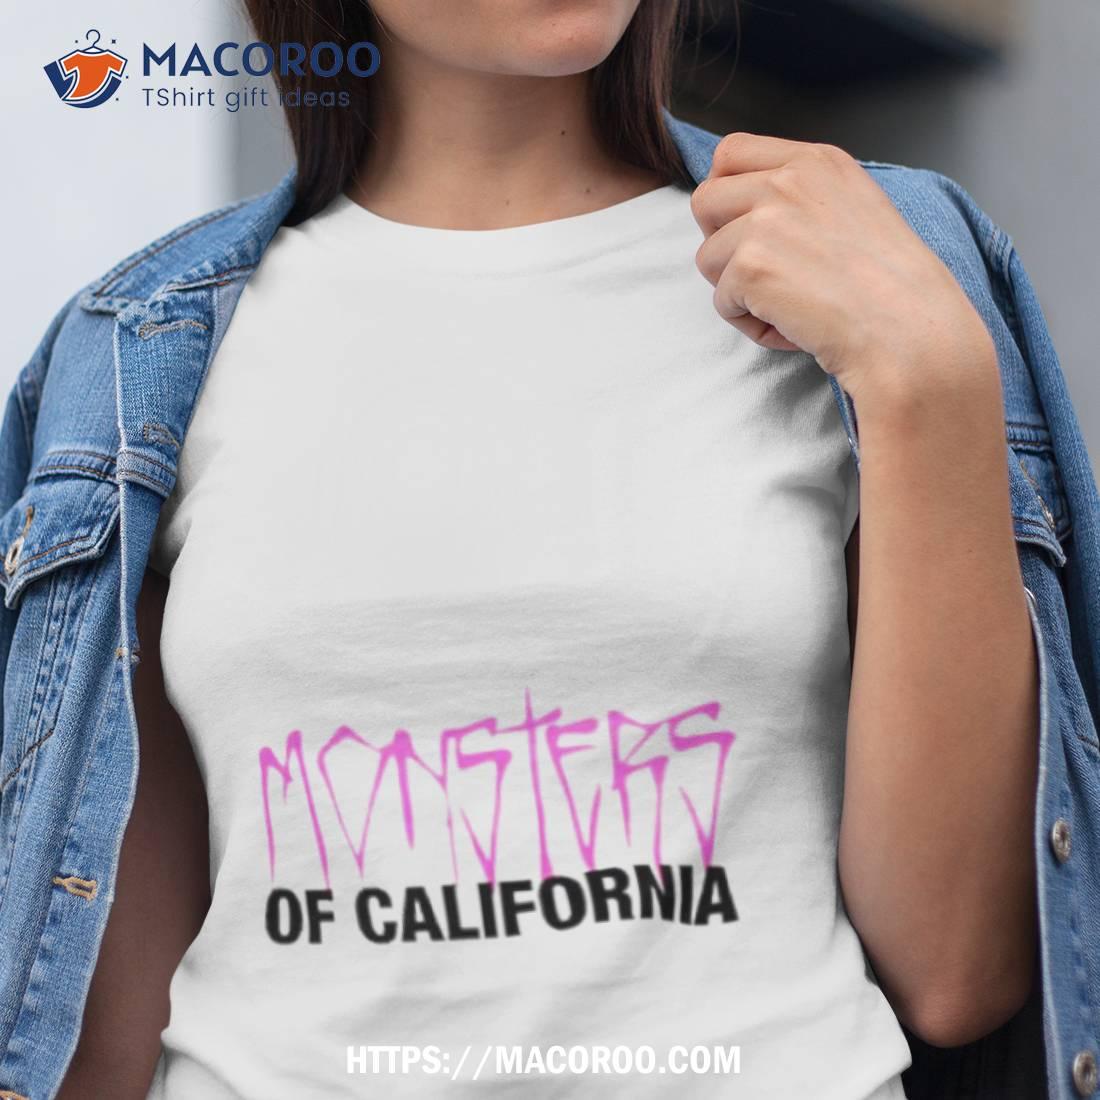 Monsters Of California Shirt